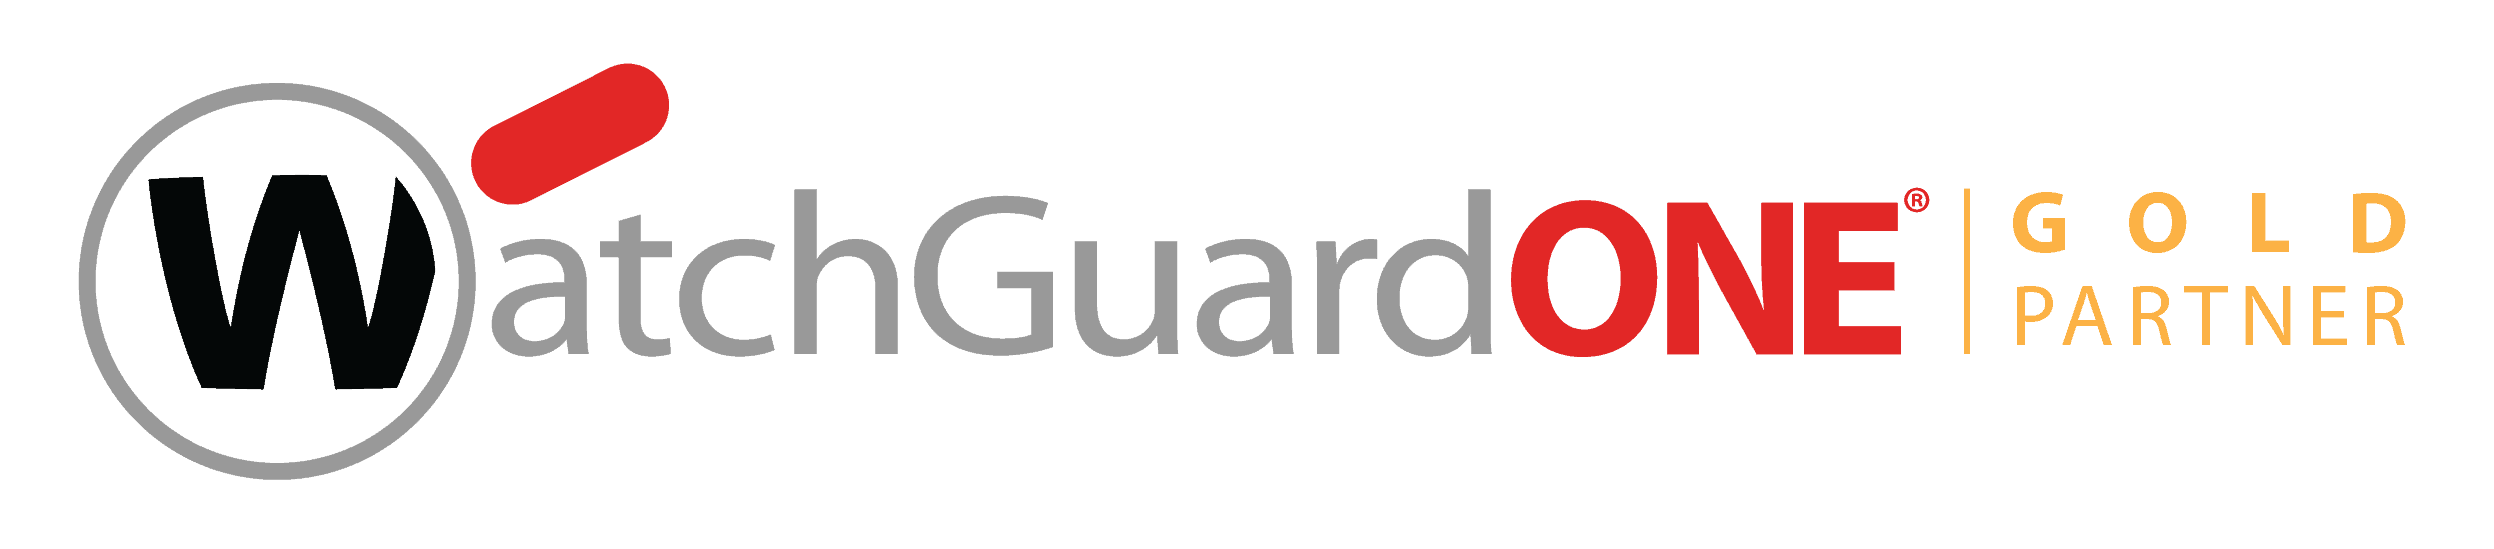 watchguard Logo Gold